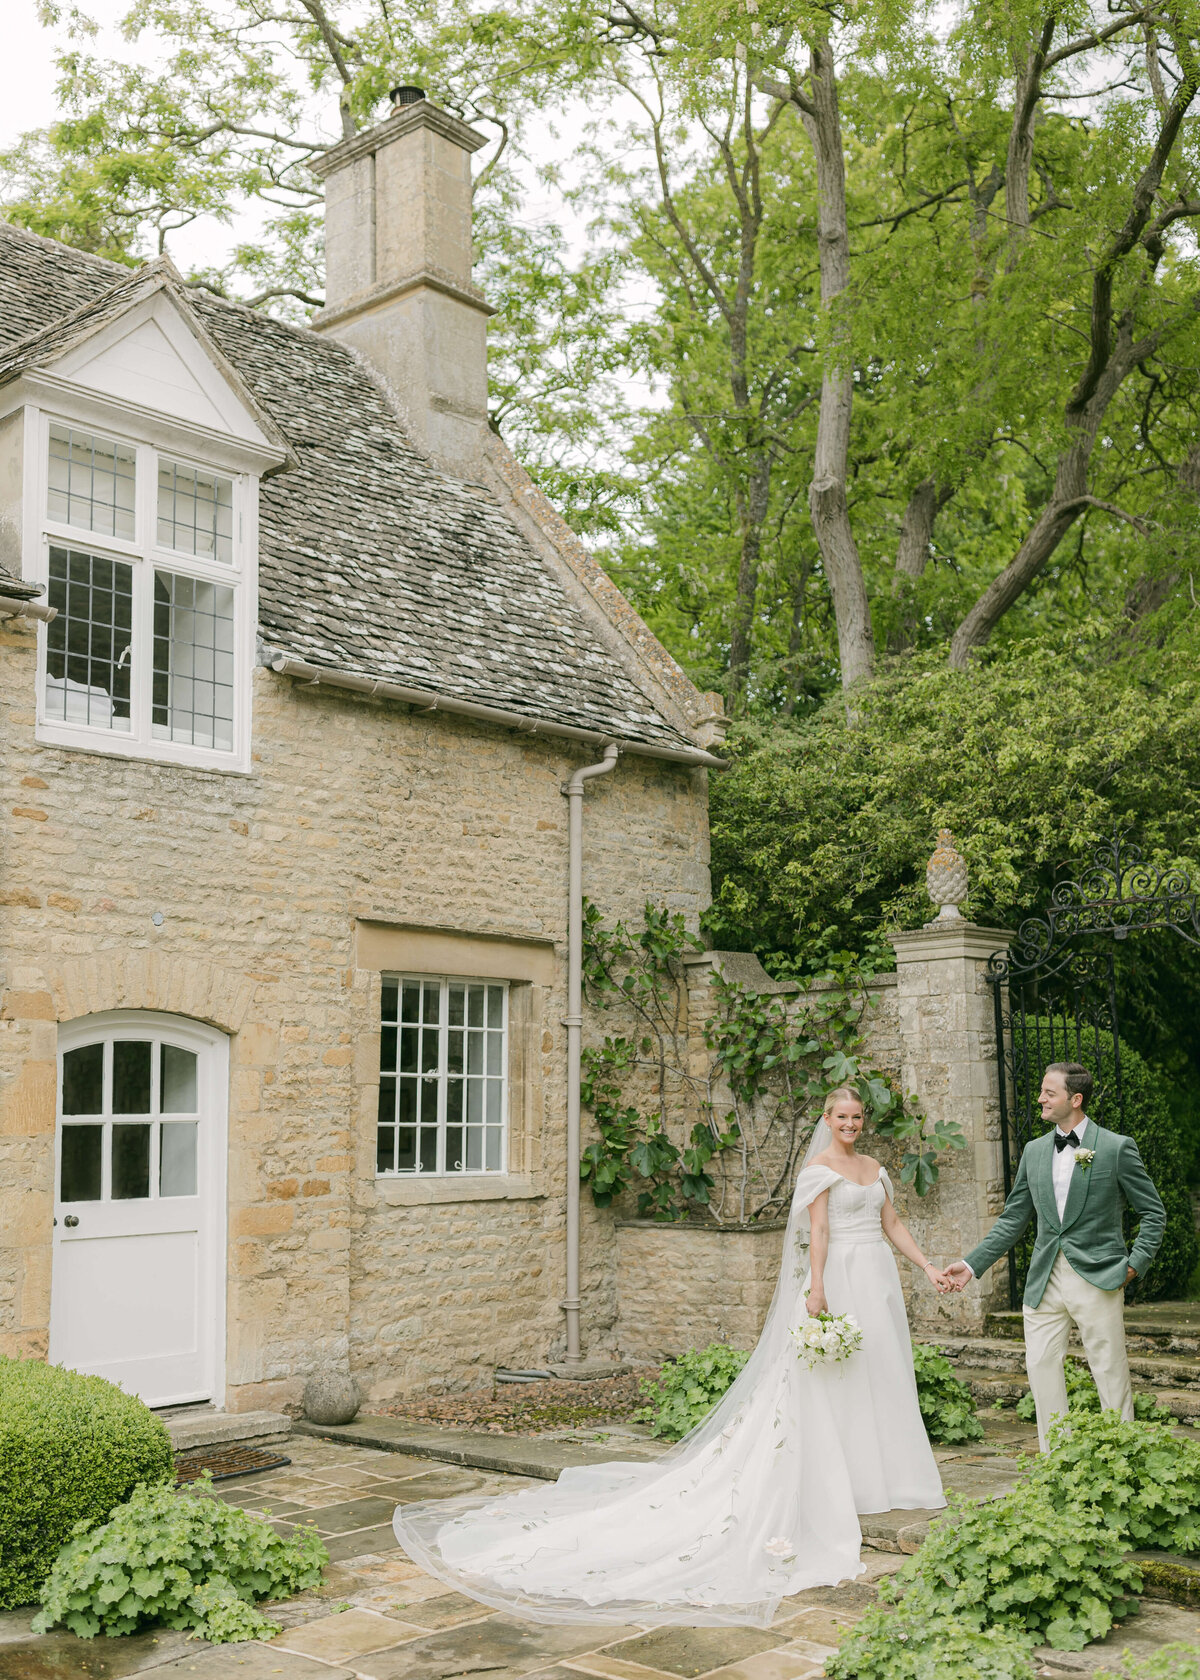 chloe-winstanley-weddings-cotswolds-cornwell-manor-monique-lhuillier-dress-green-suit-portrait